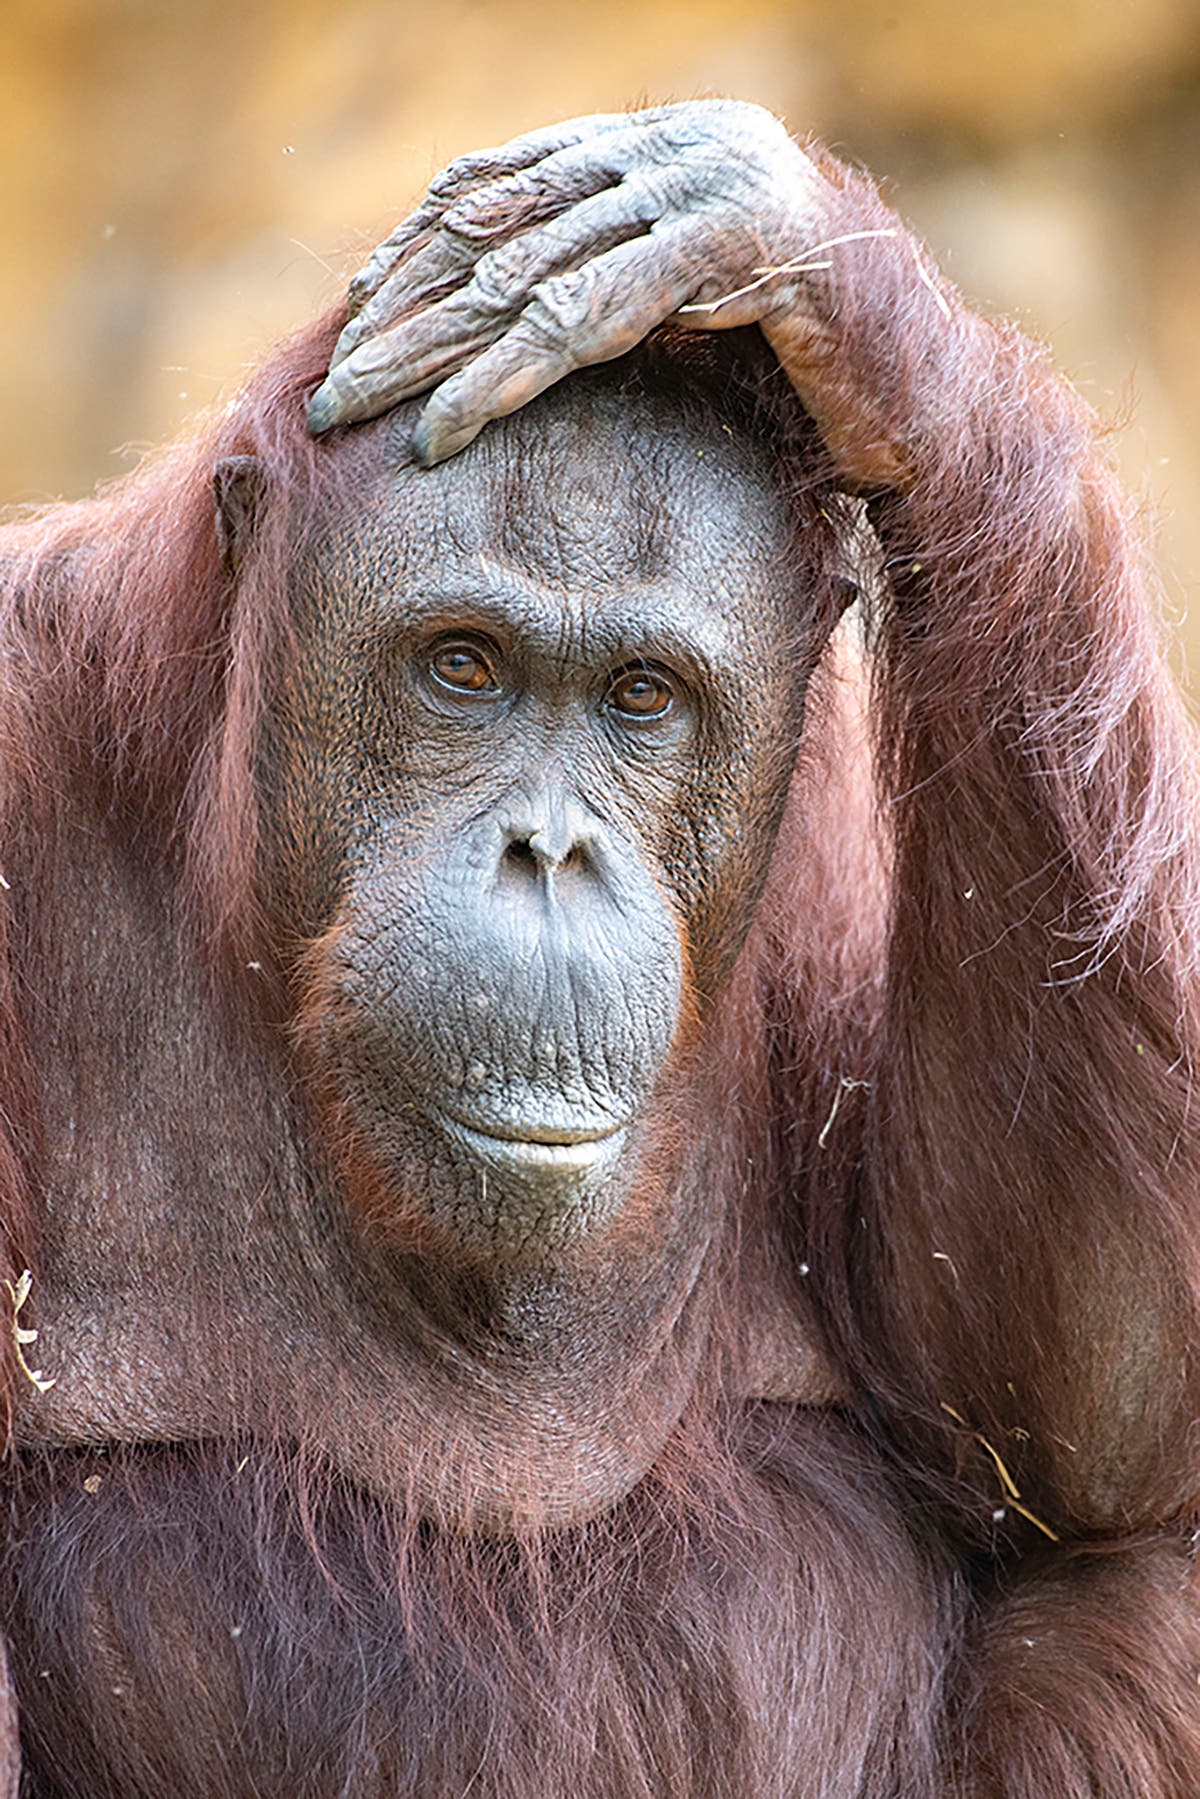 Zoo Miami: Orangutan dies following dental surgery